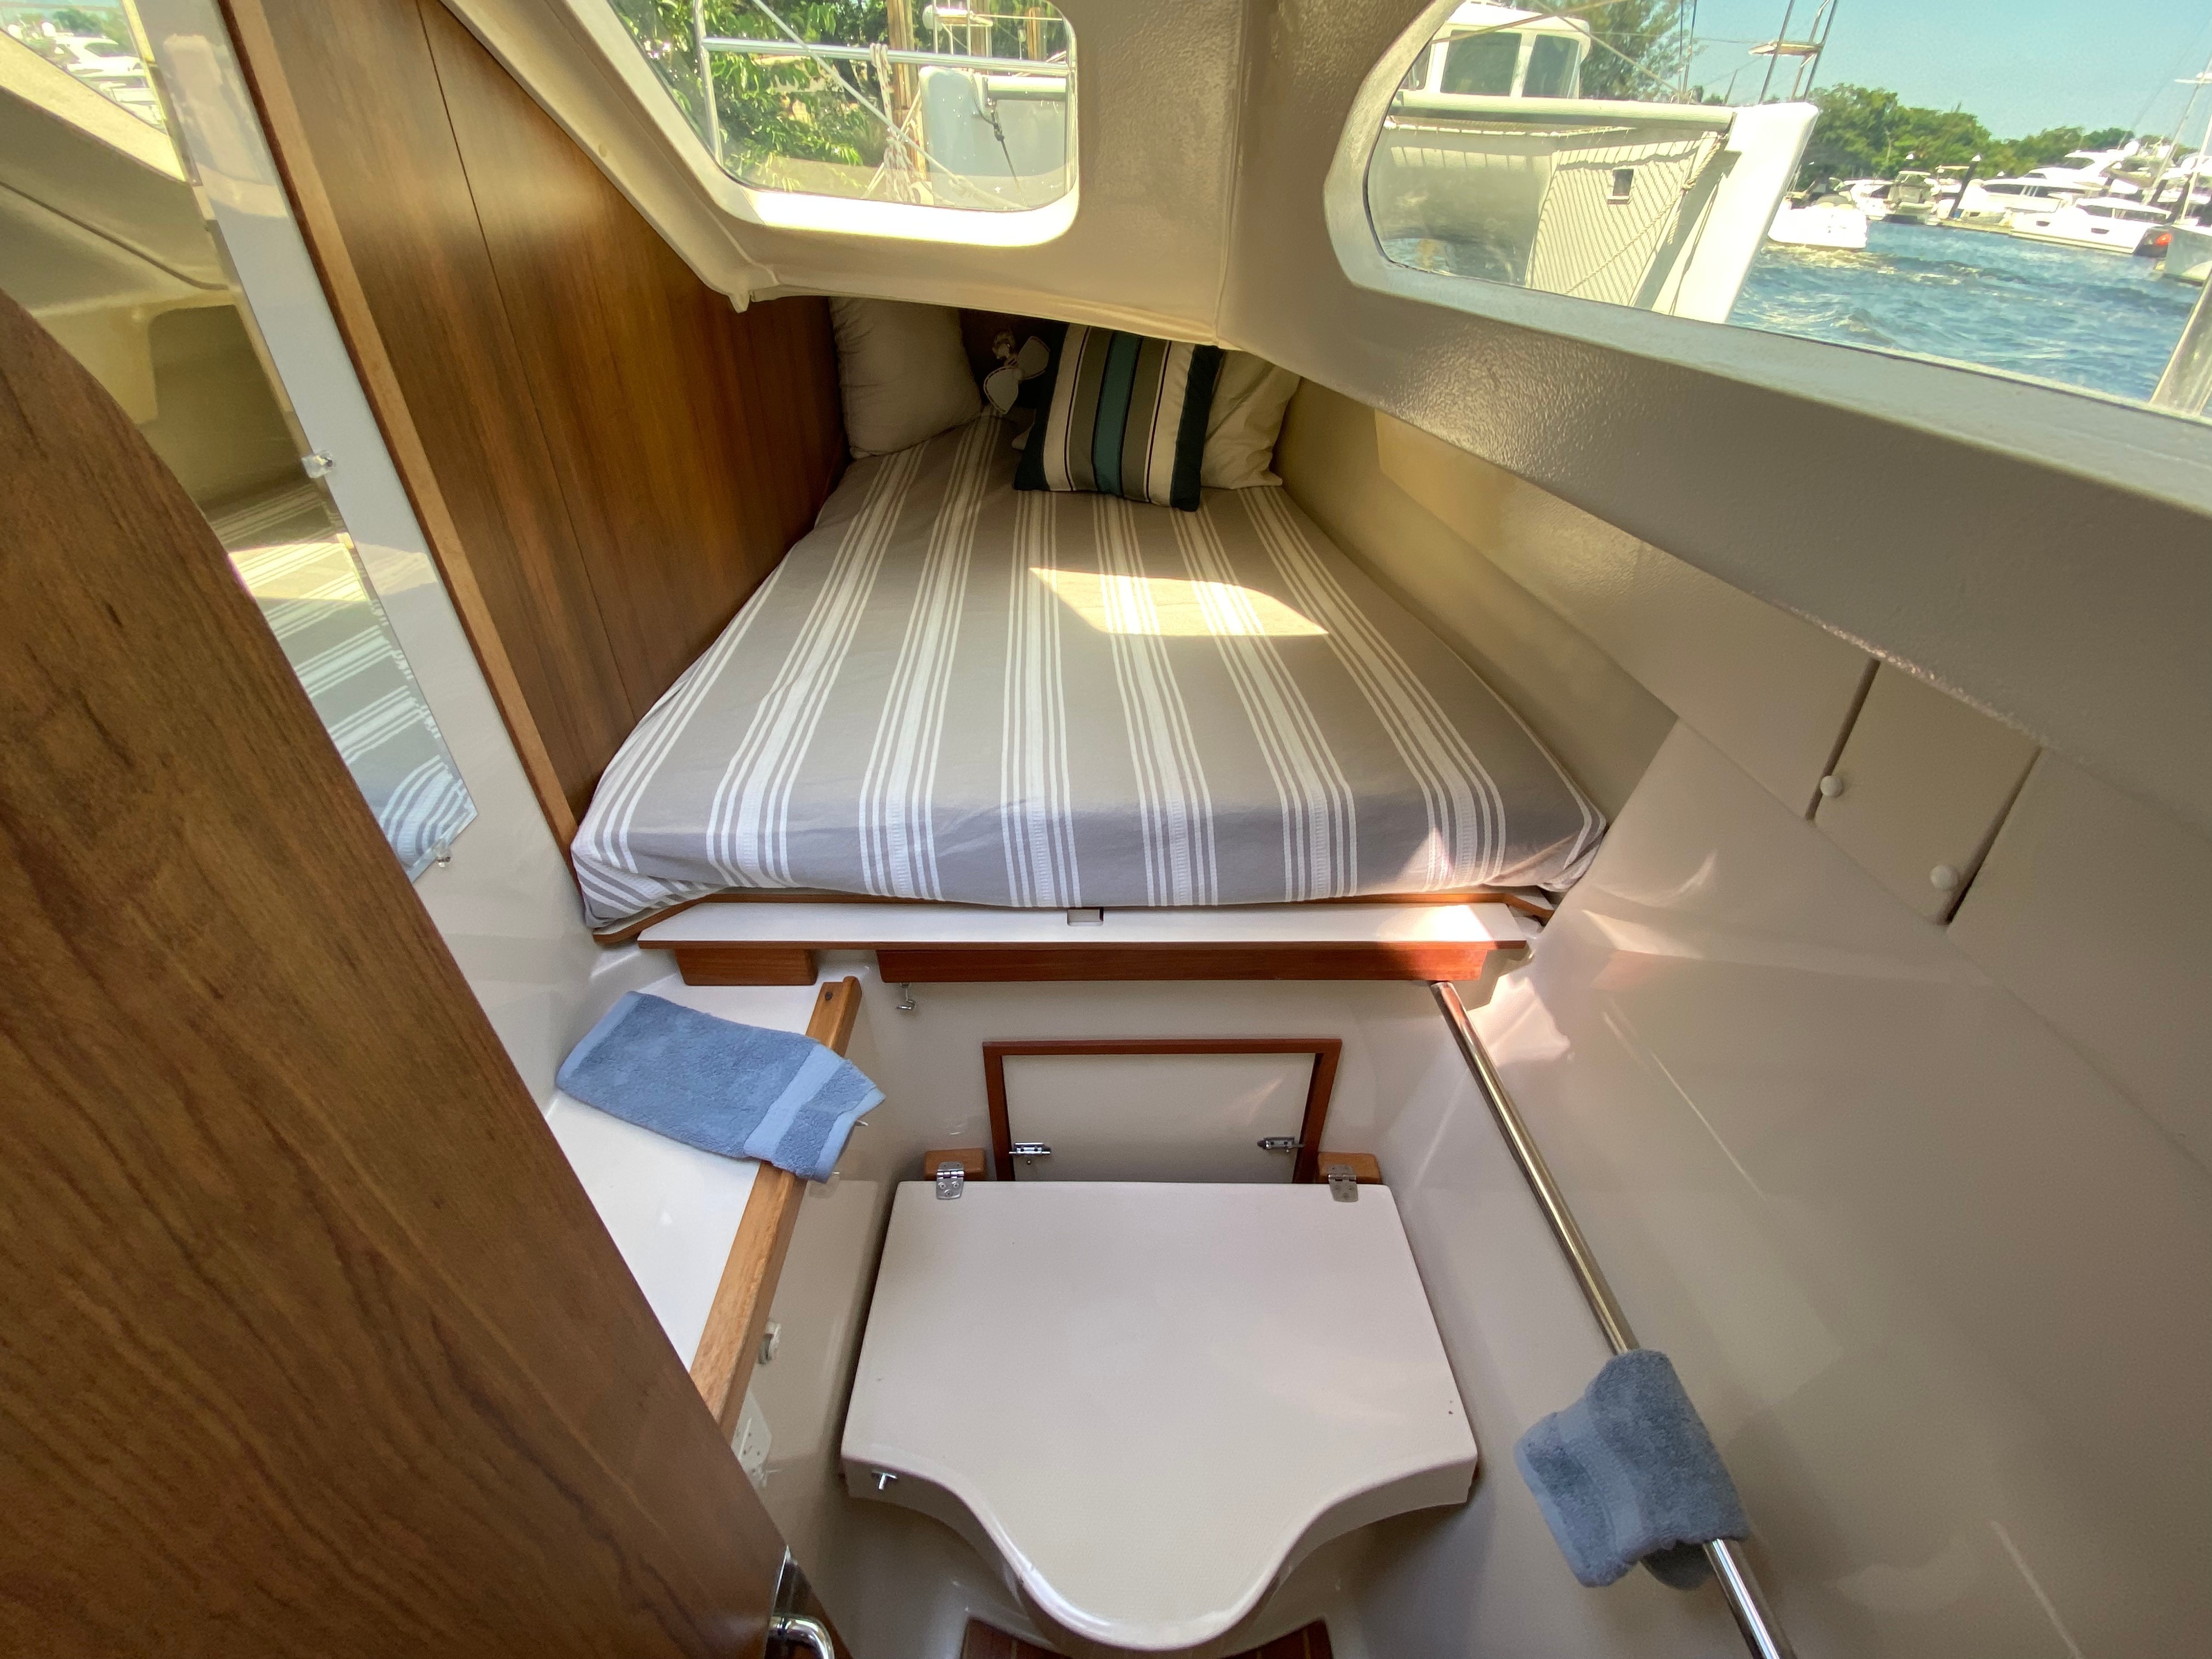 Used Sail Catamaran for Sale 2015 Gemini Legacy 35 Additional Information